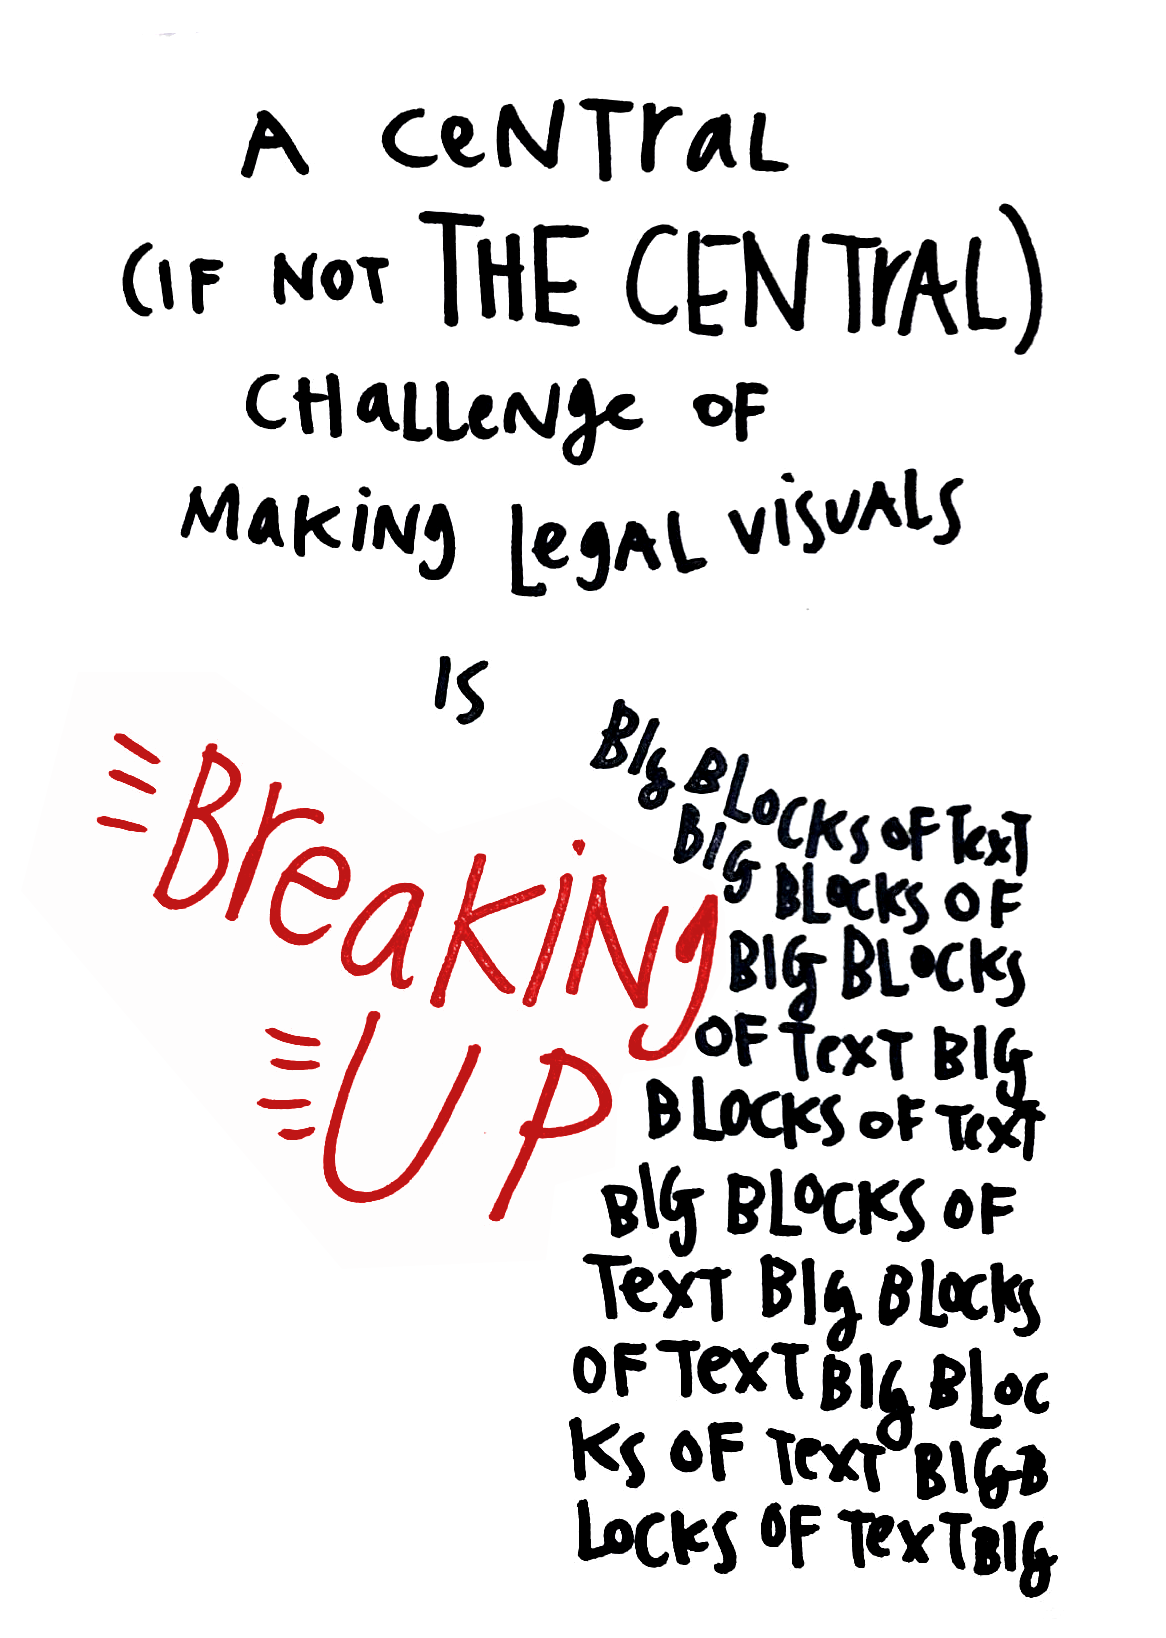 Visual Law Meetup takeaways - challenge - breaking up big blocks of text